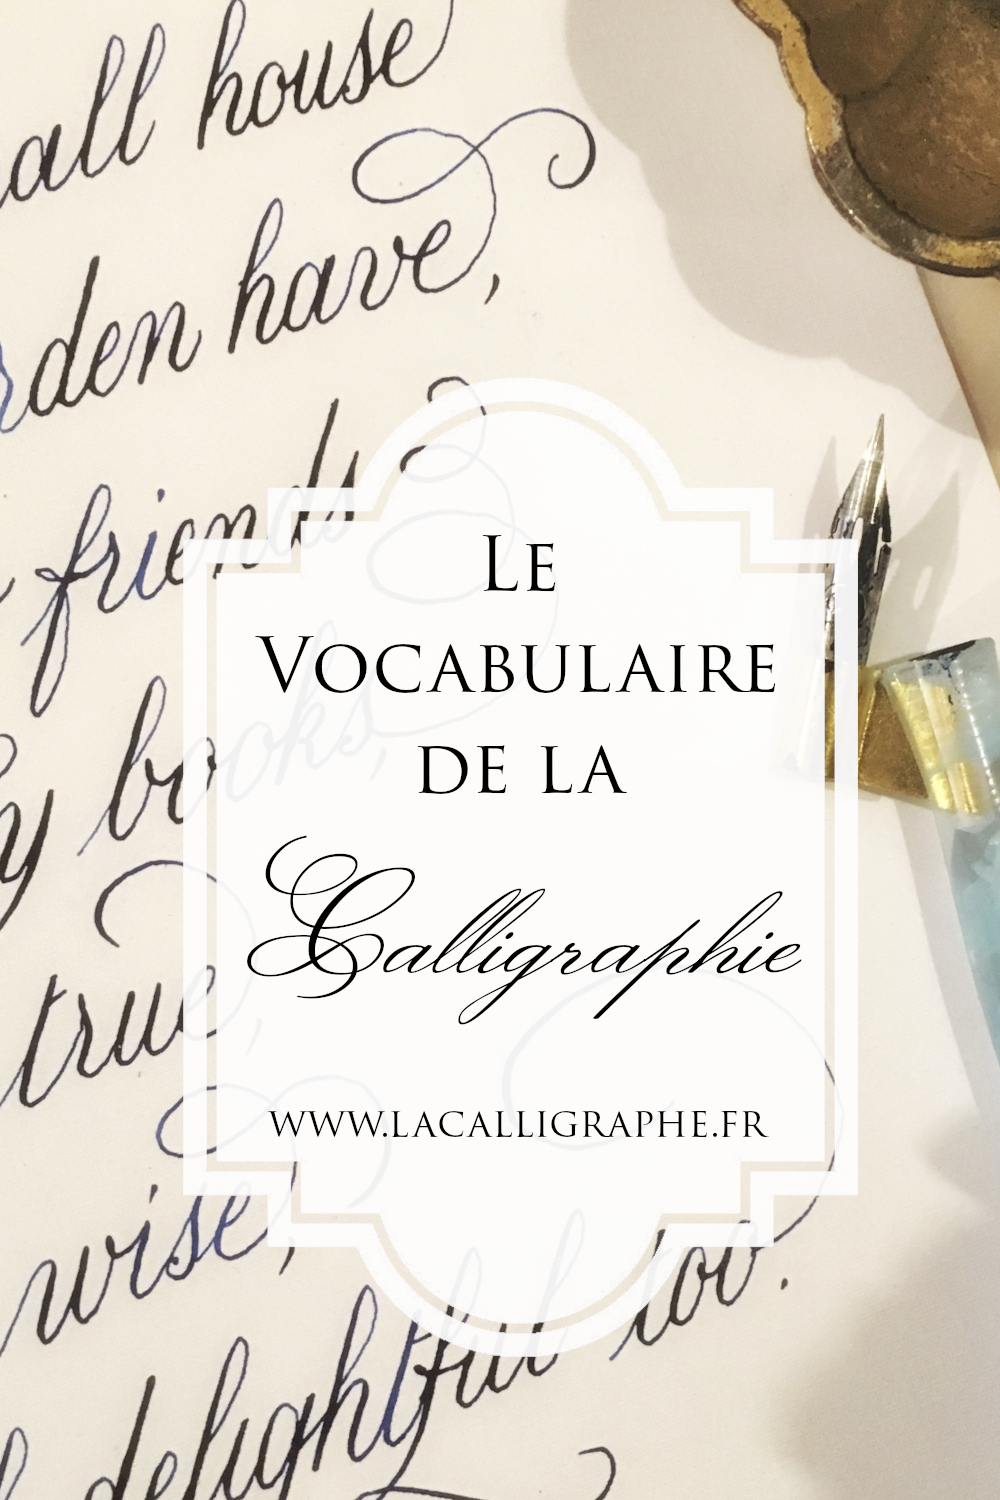 Le Vocabulaire de la Calligraphie - La Calligraphe